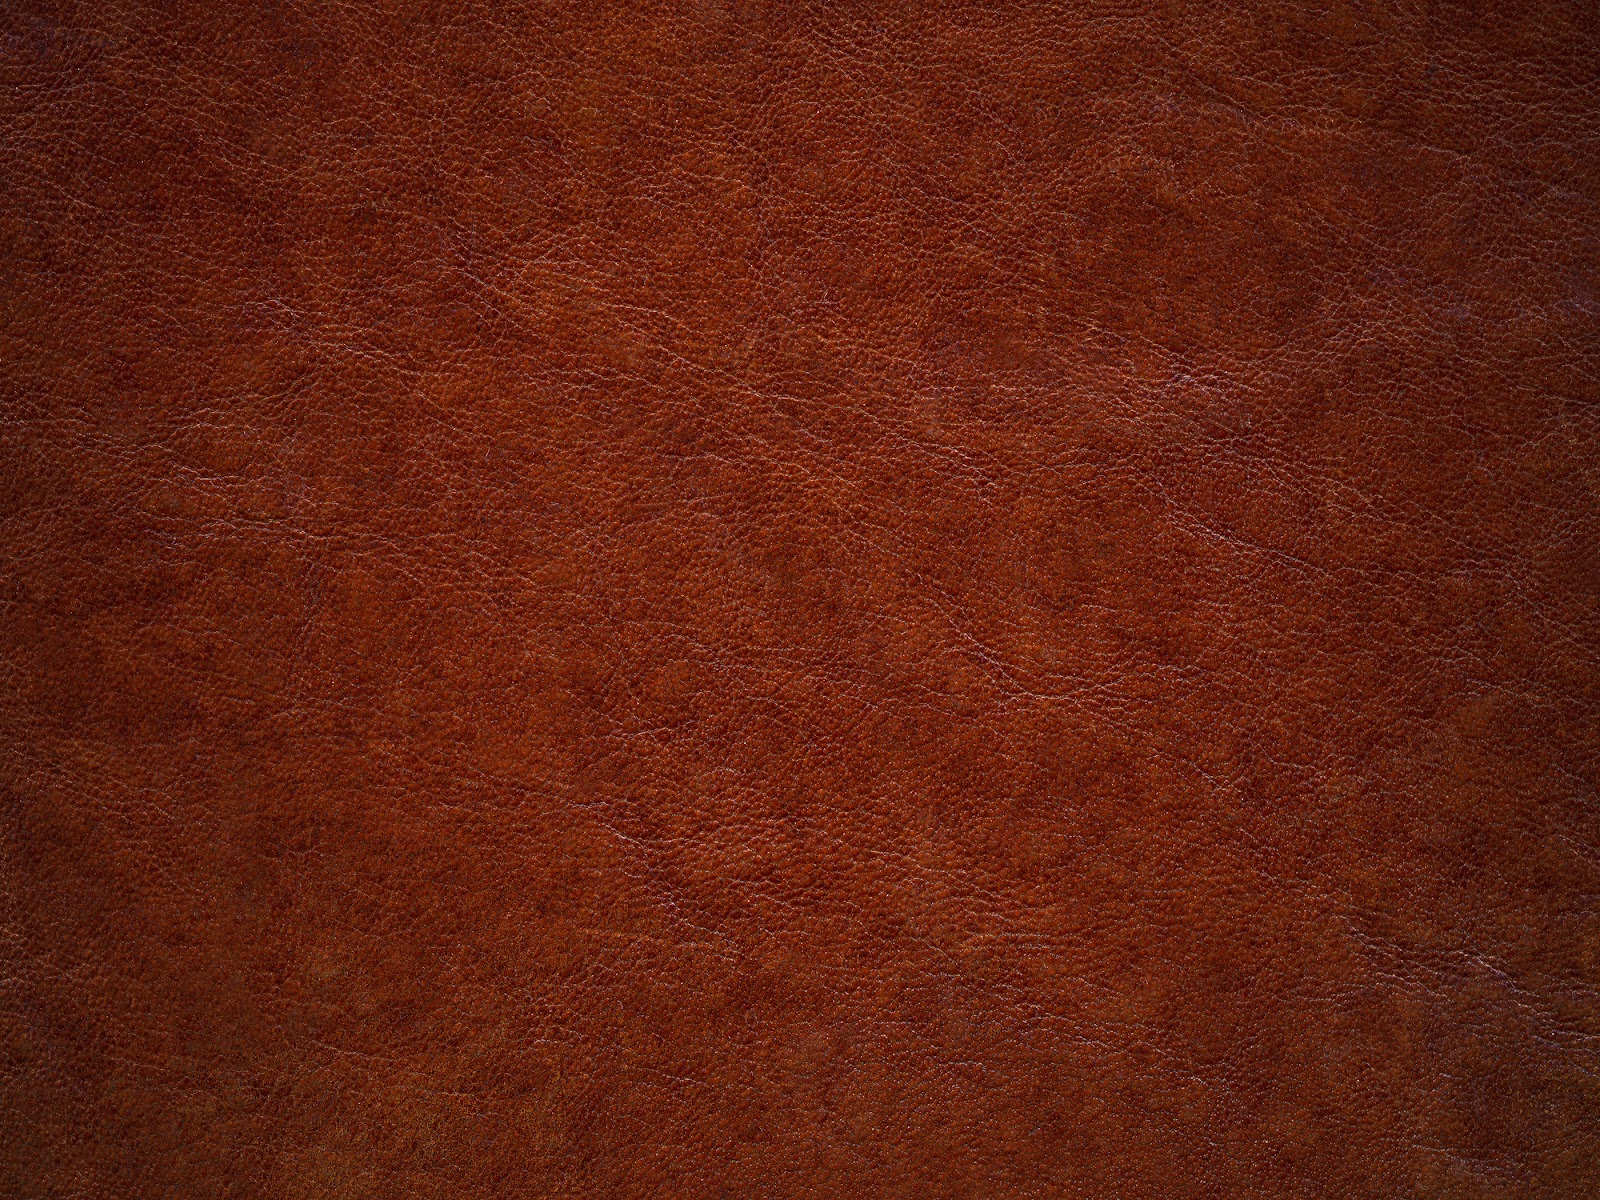 bigstock-Brown-Leather-27631439.jpg